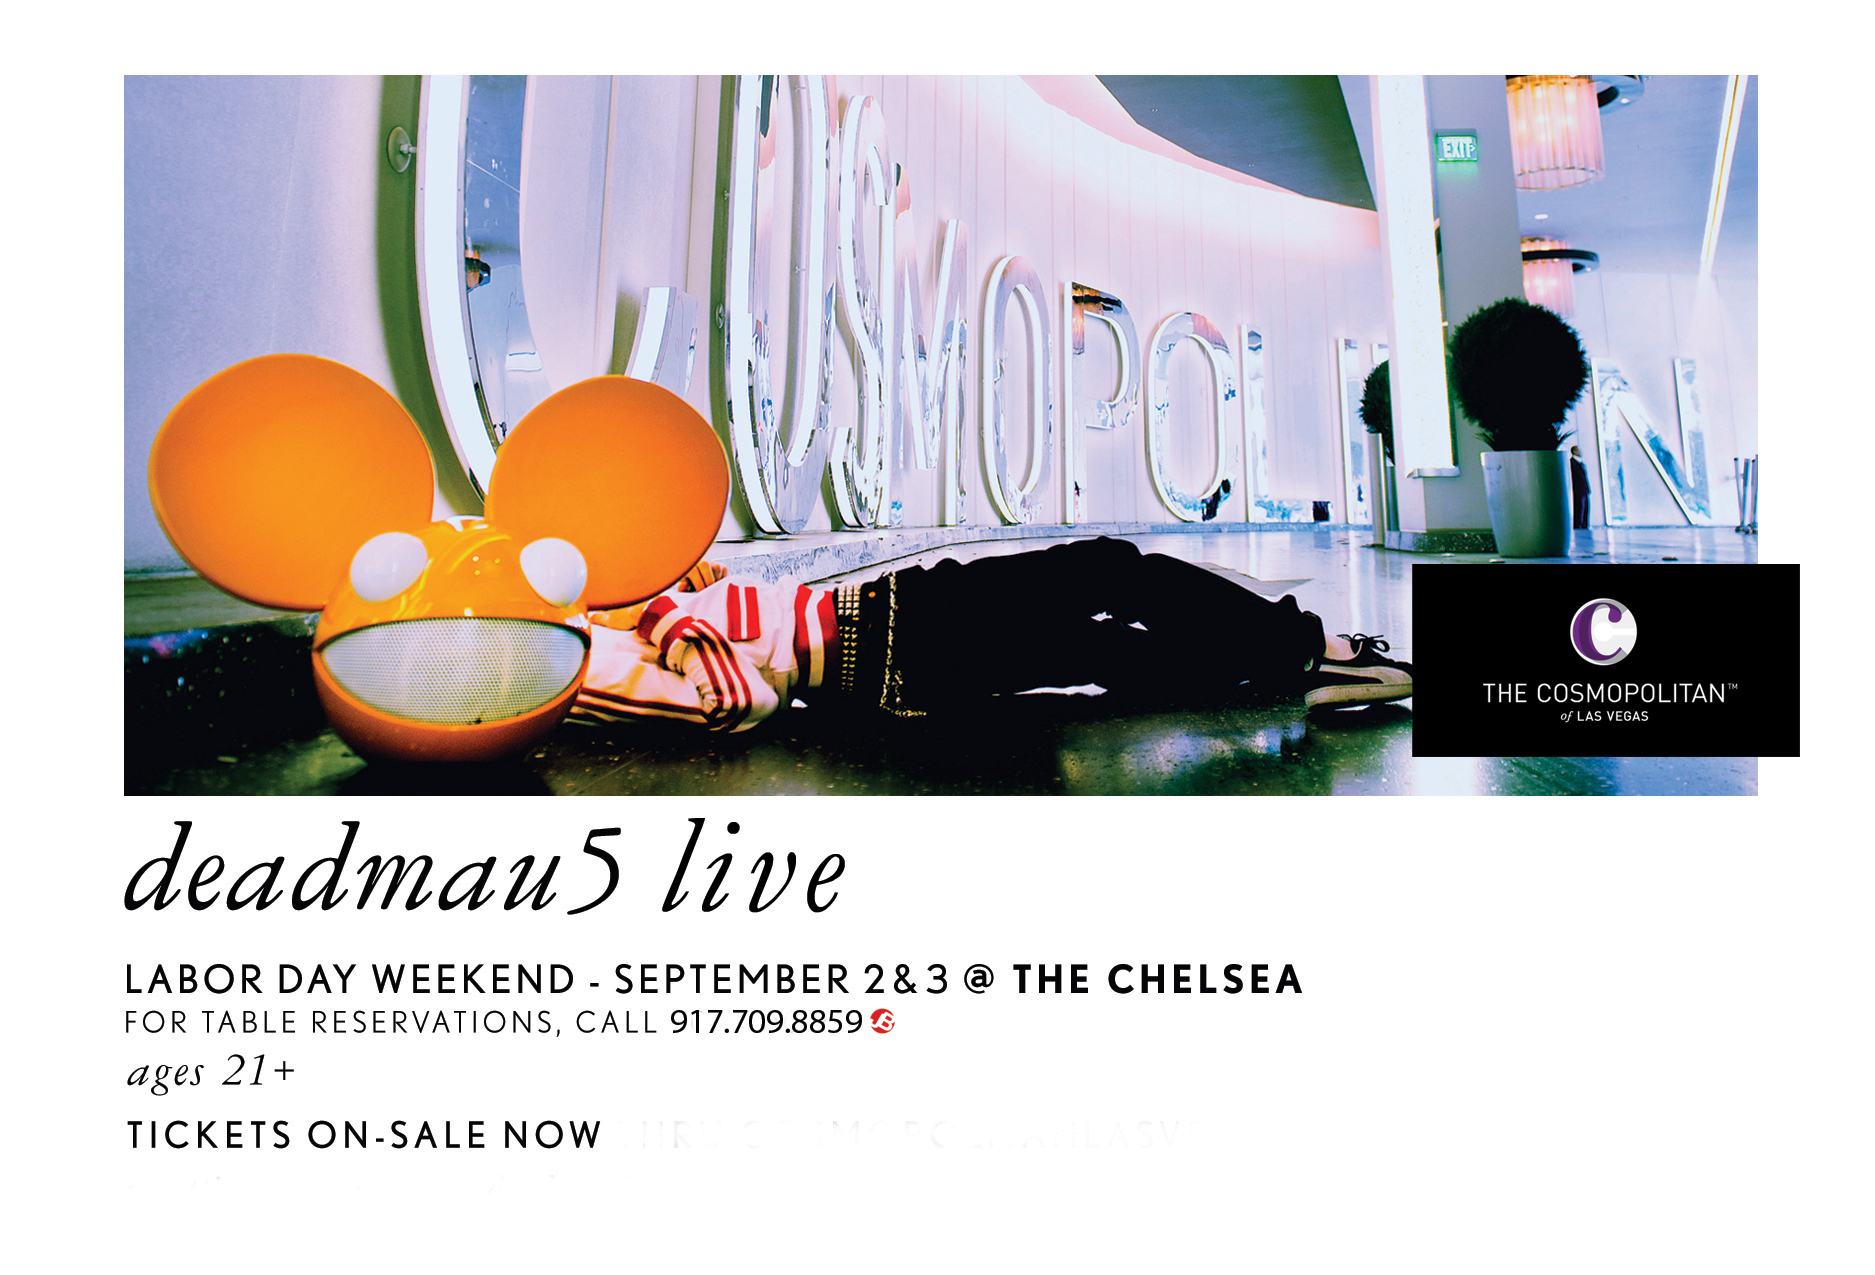 Deadmau5 Live @ The Chelsea SAT on 09/03/11